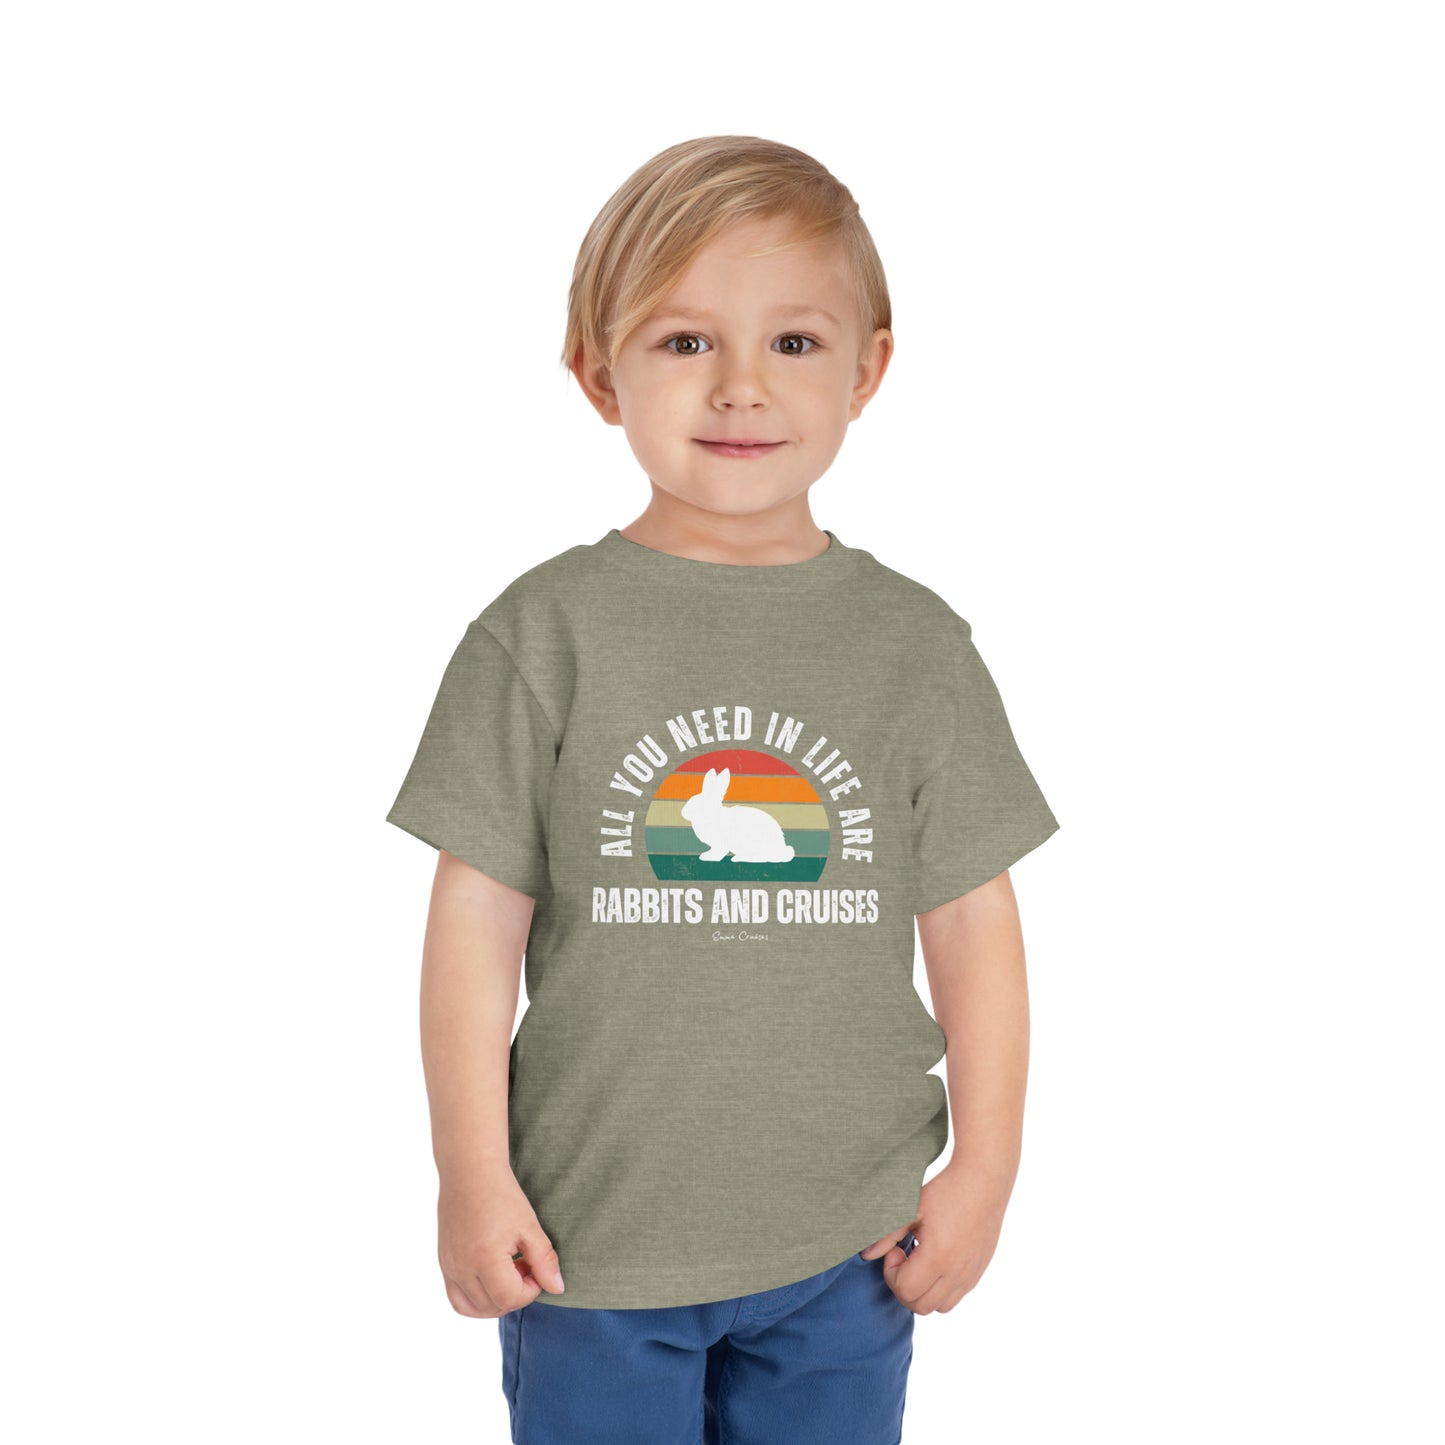 Rabbits and Cruises - Toddler UNISEX T-Shirt